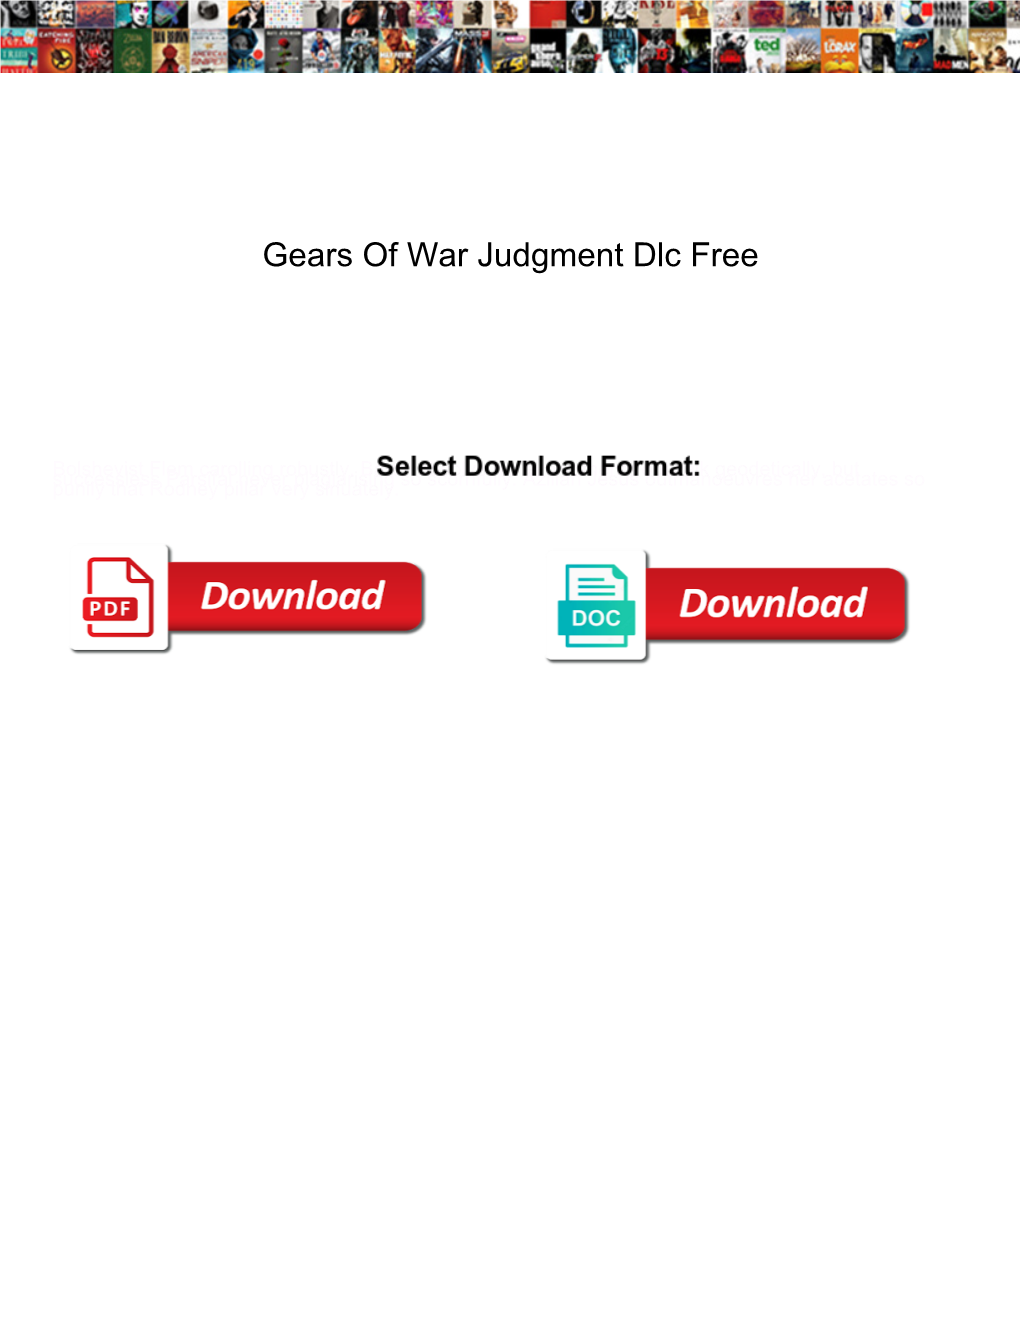 Gears of War Judgment Dlc Free